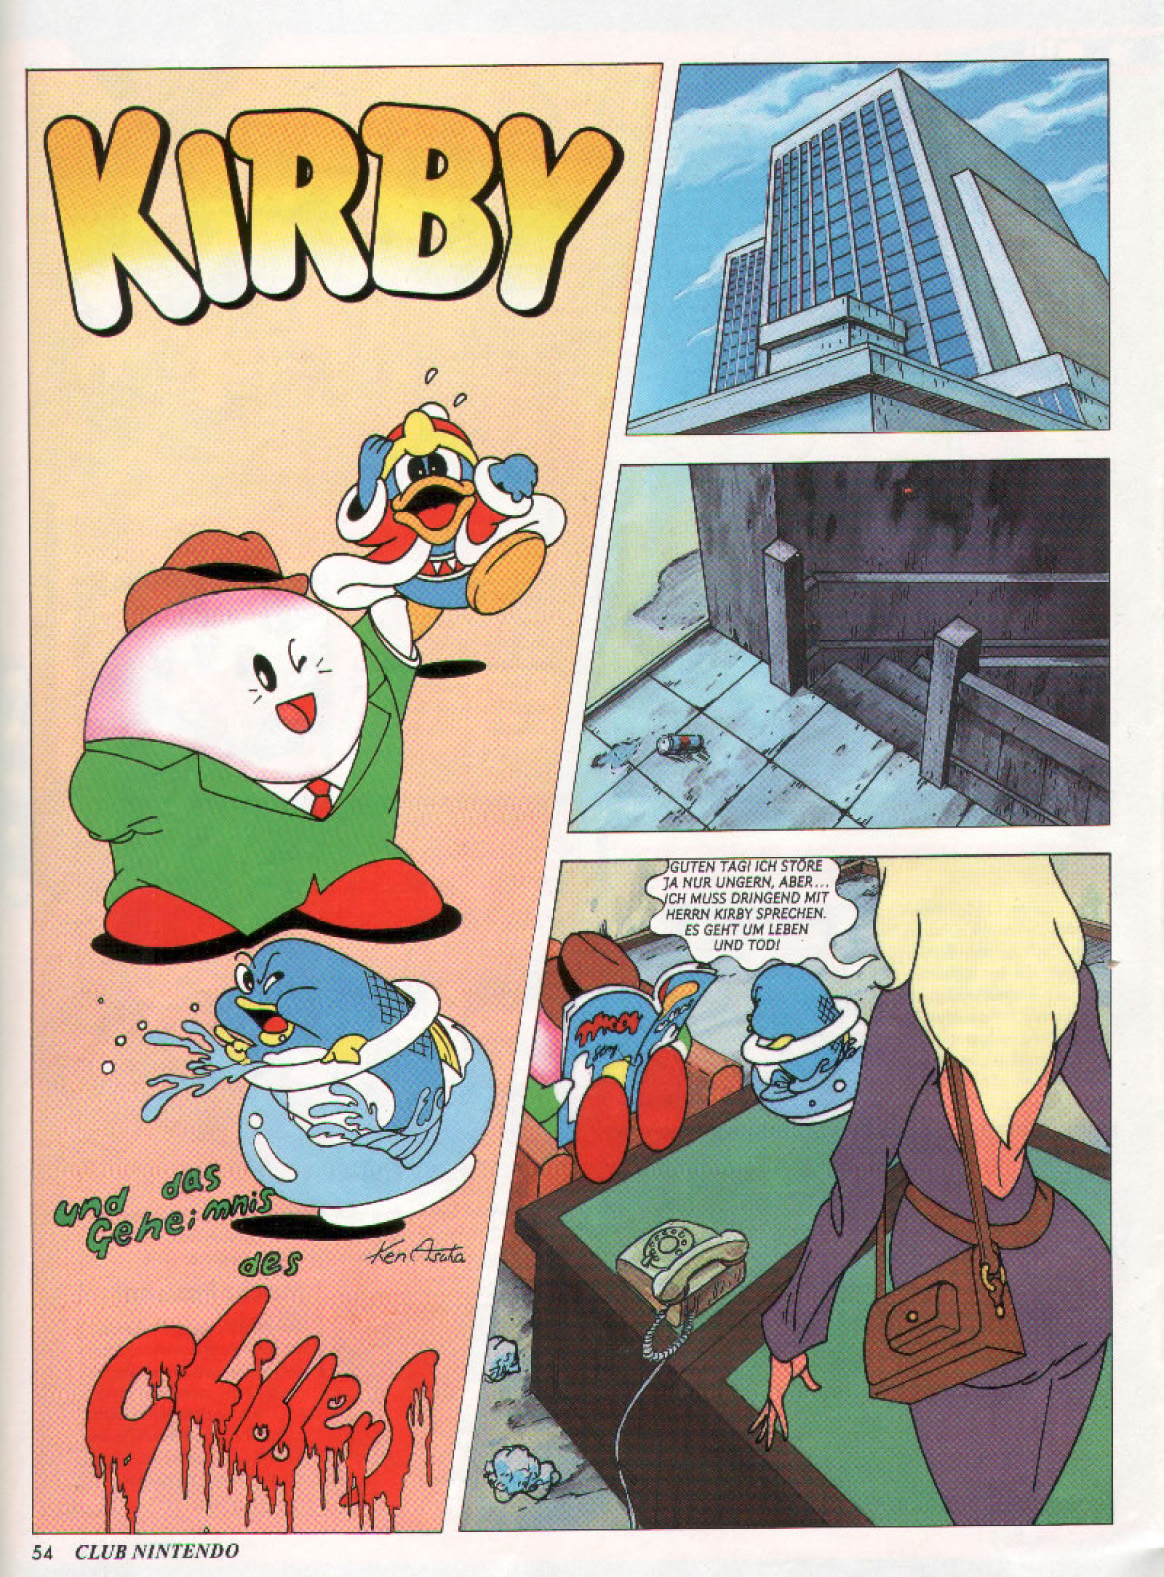 Kirby25th: Kirby's Biggest Case, Kirby na versão noir alemã - Nintendo Blast